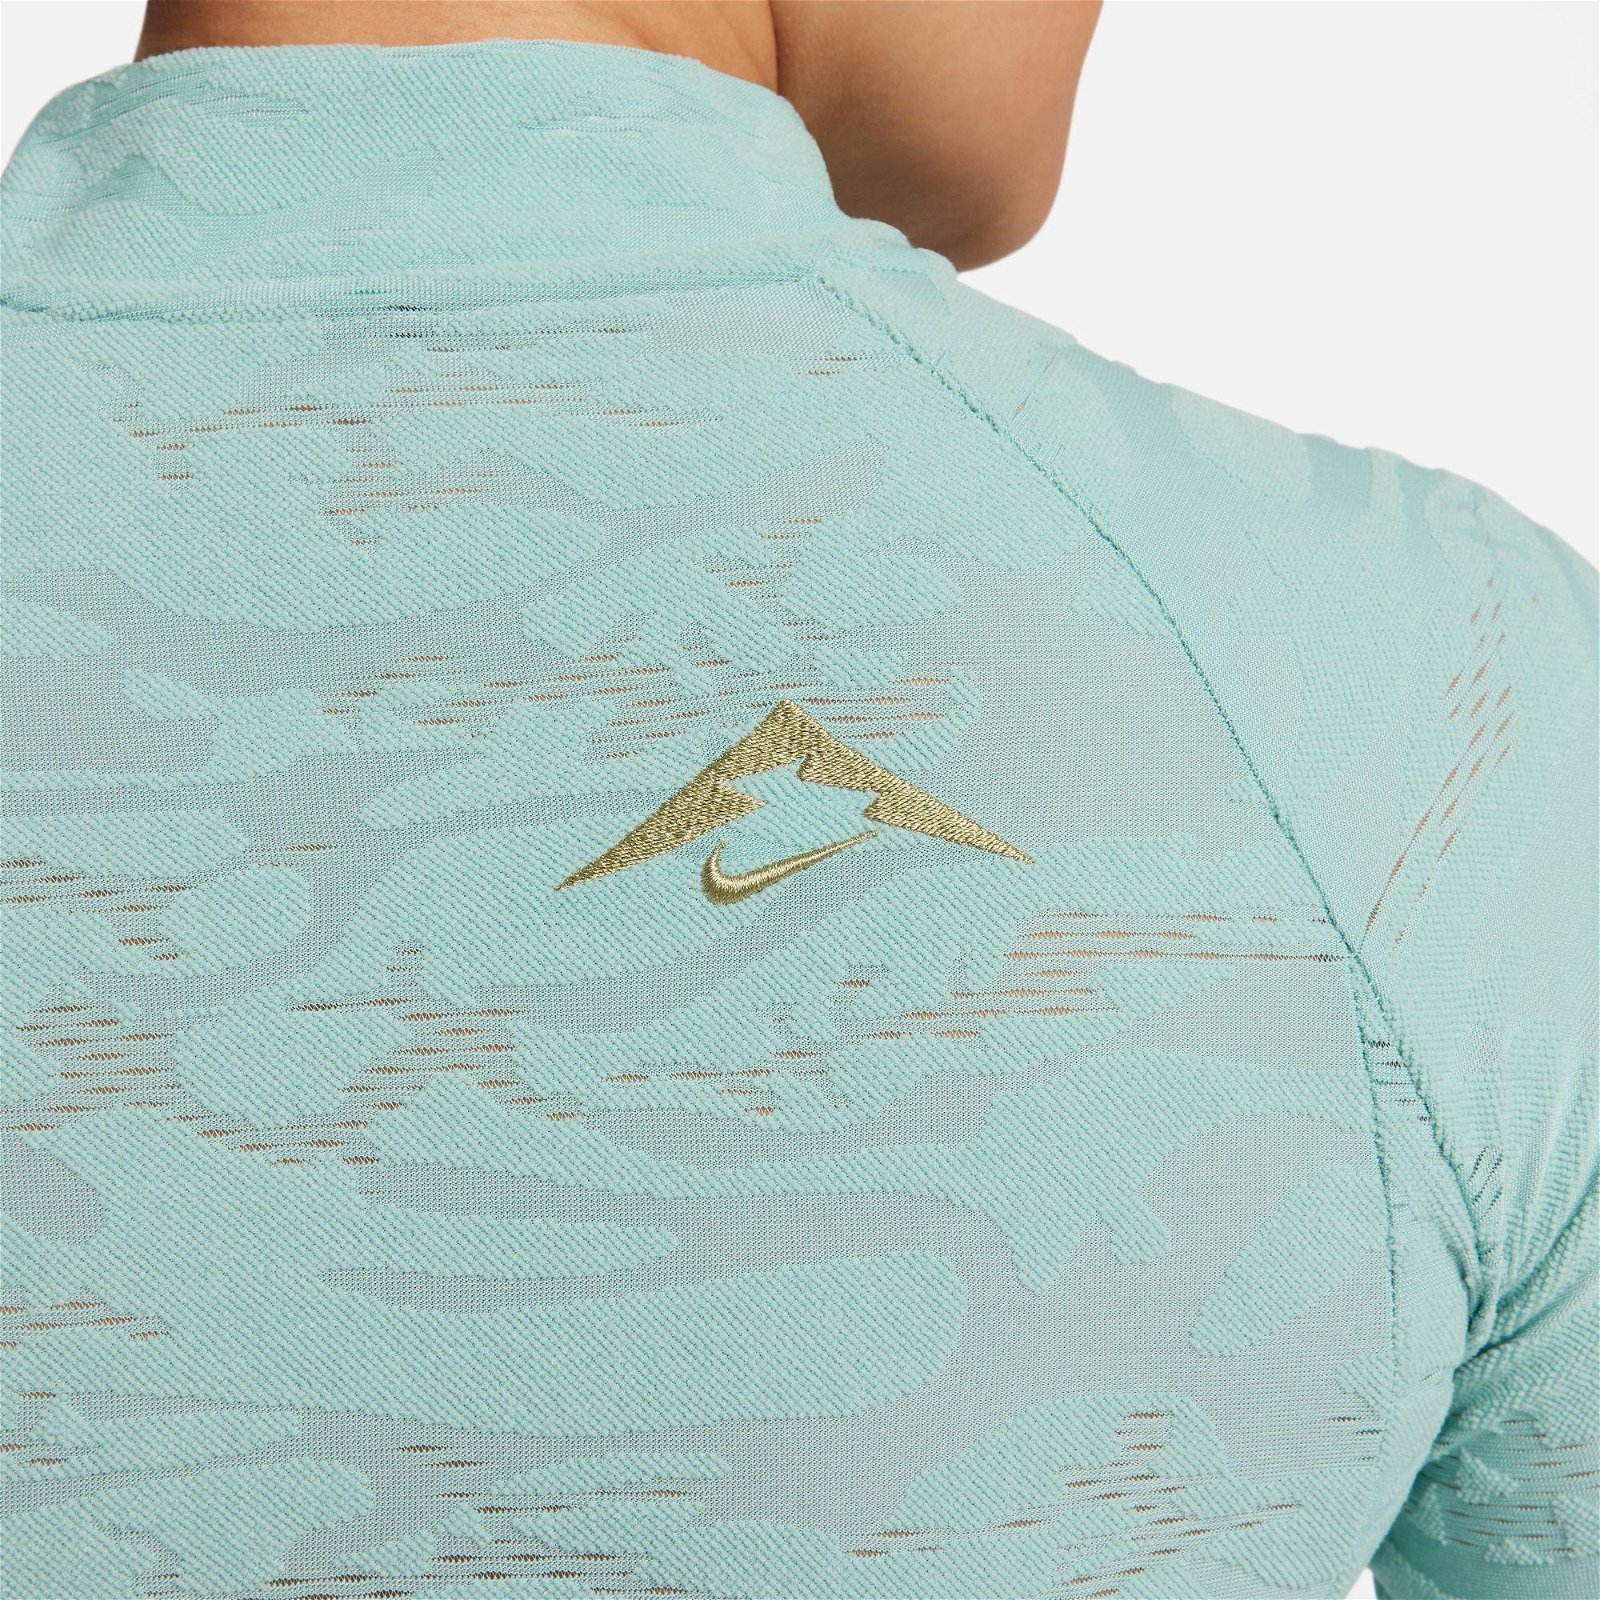 Nike Trail Dri-FIT Midlayer Kadın Yeşil Uzun Kollu T-Shirt